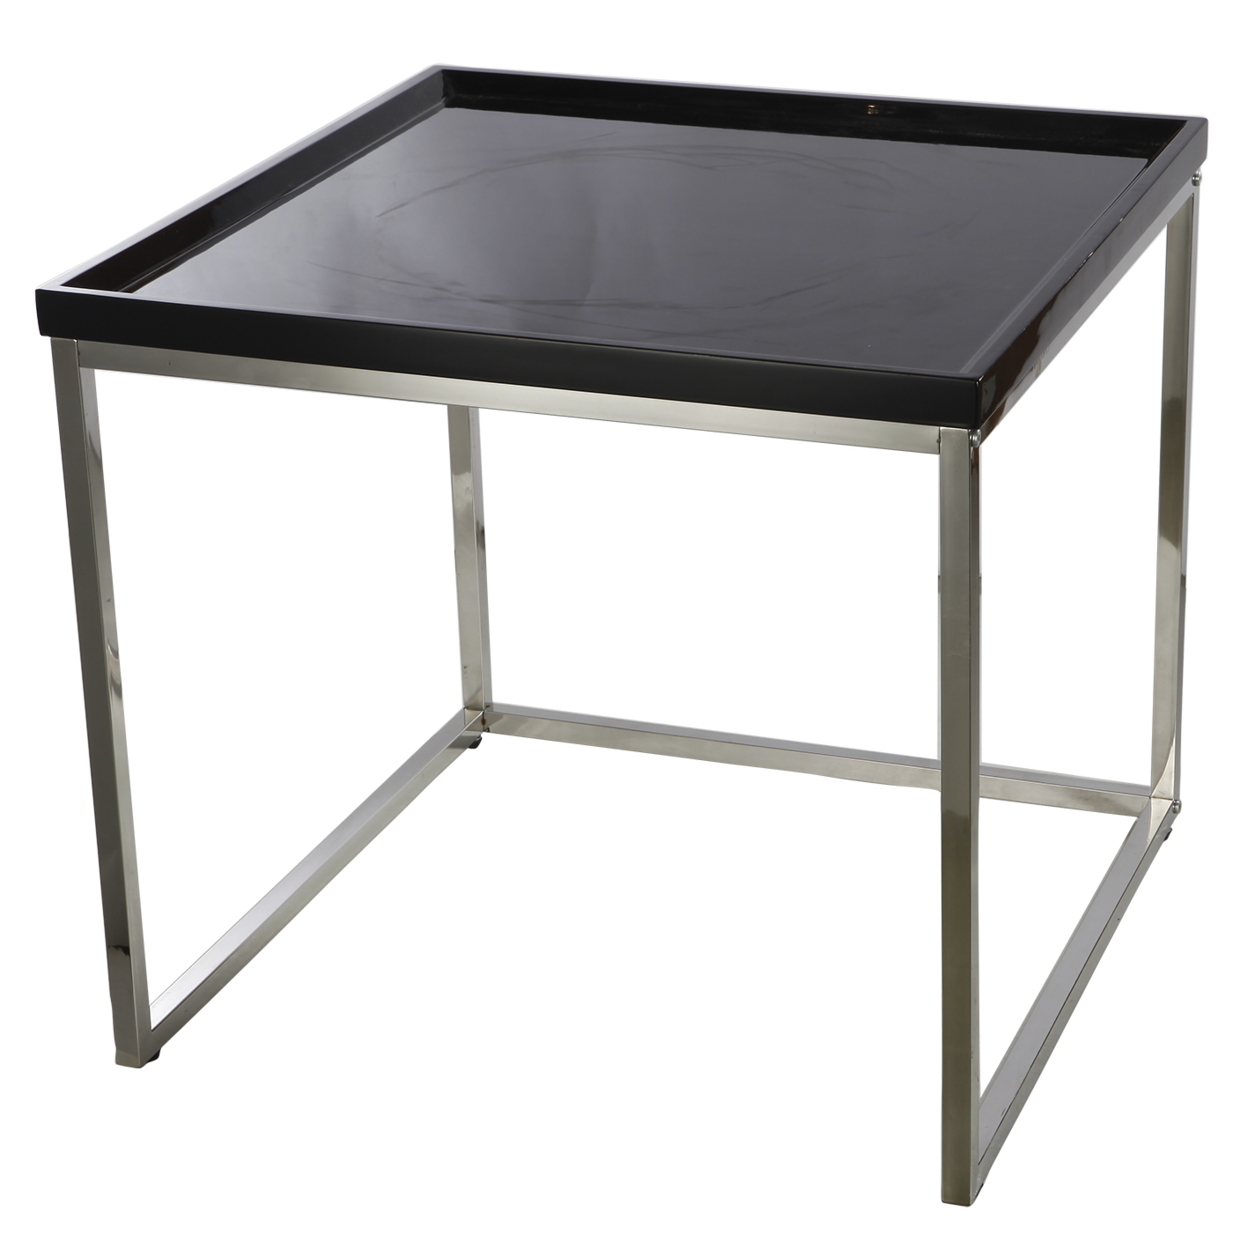 MDF Top Side Table With Metal Base, Black & Silver- Saltoro Sherpi